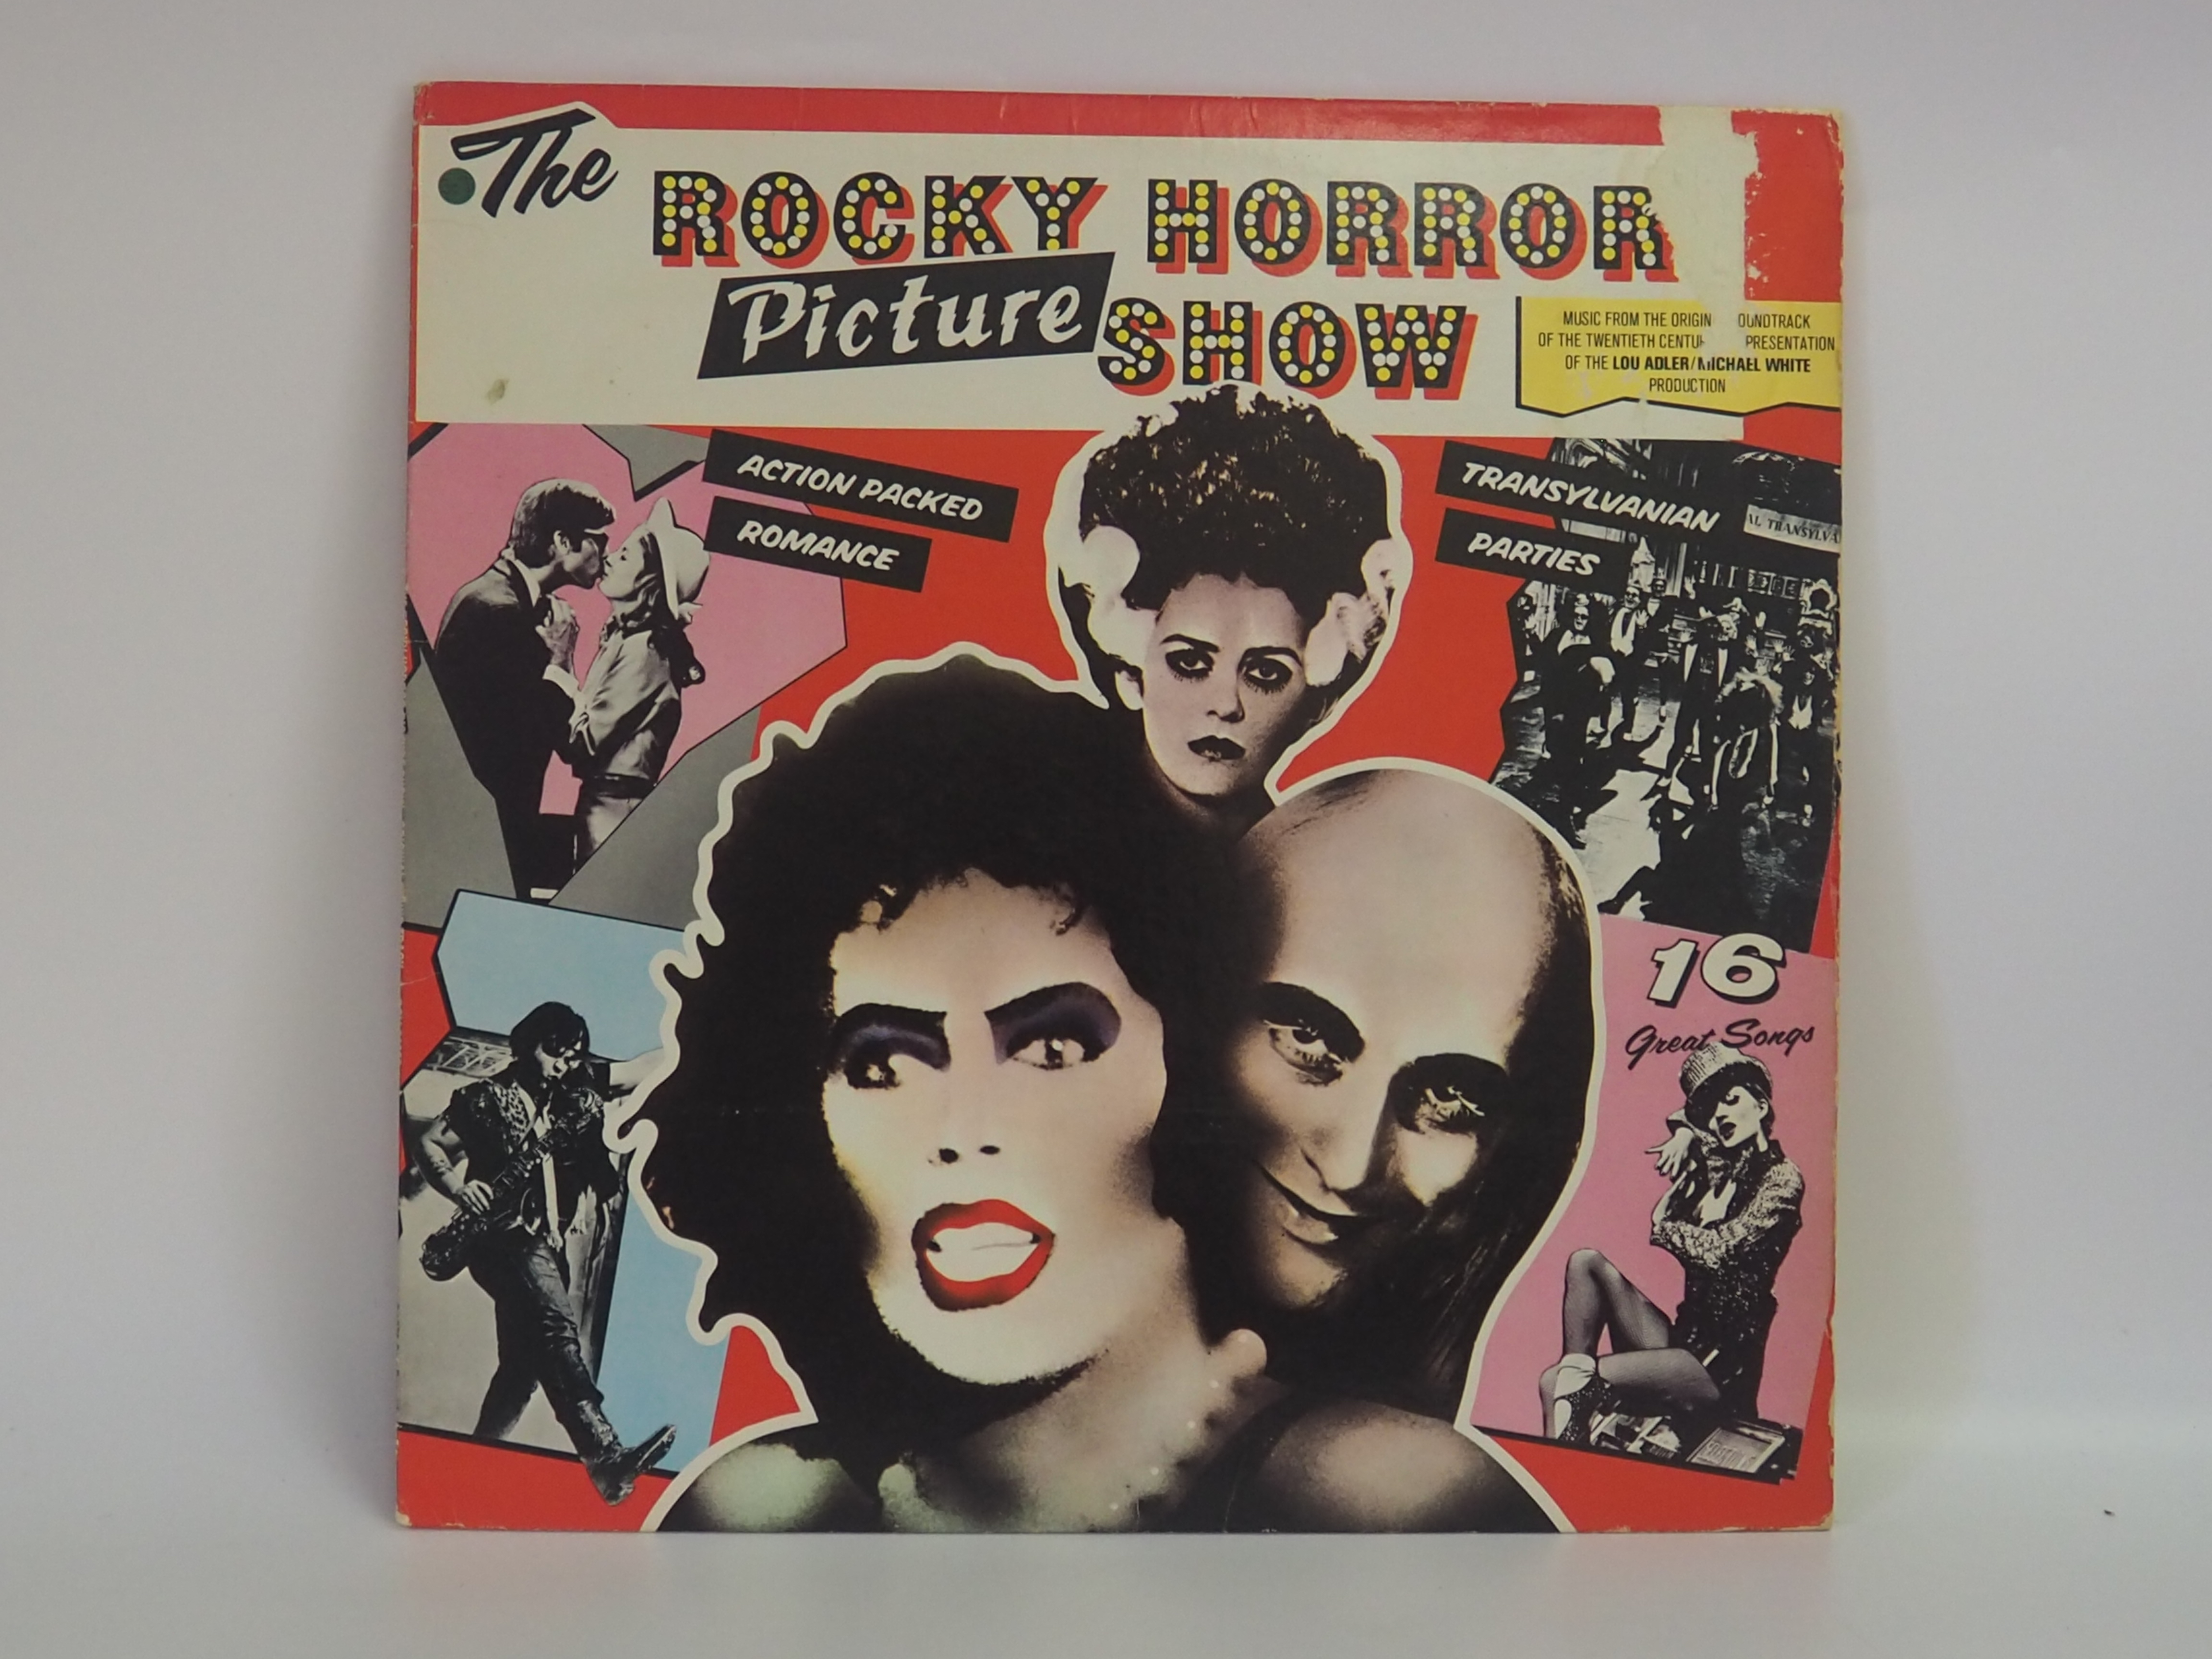 The Rocky Horror Picture Show 12" Vinyl album